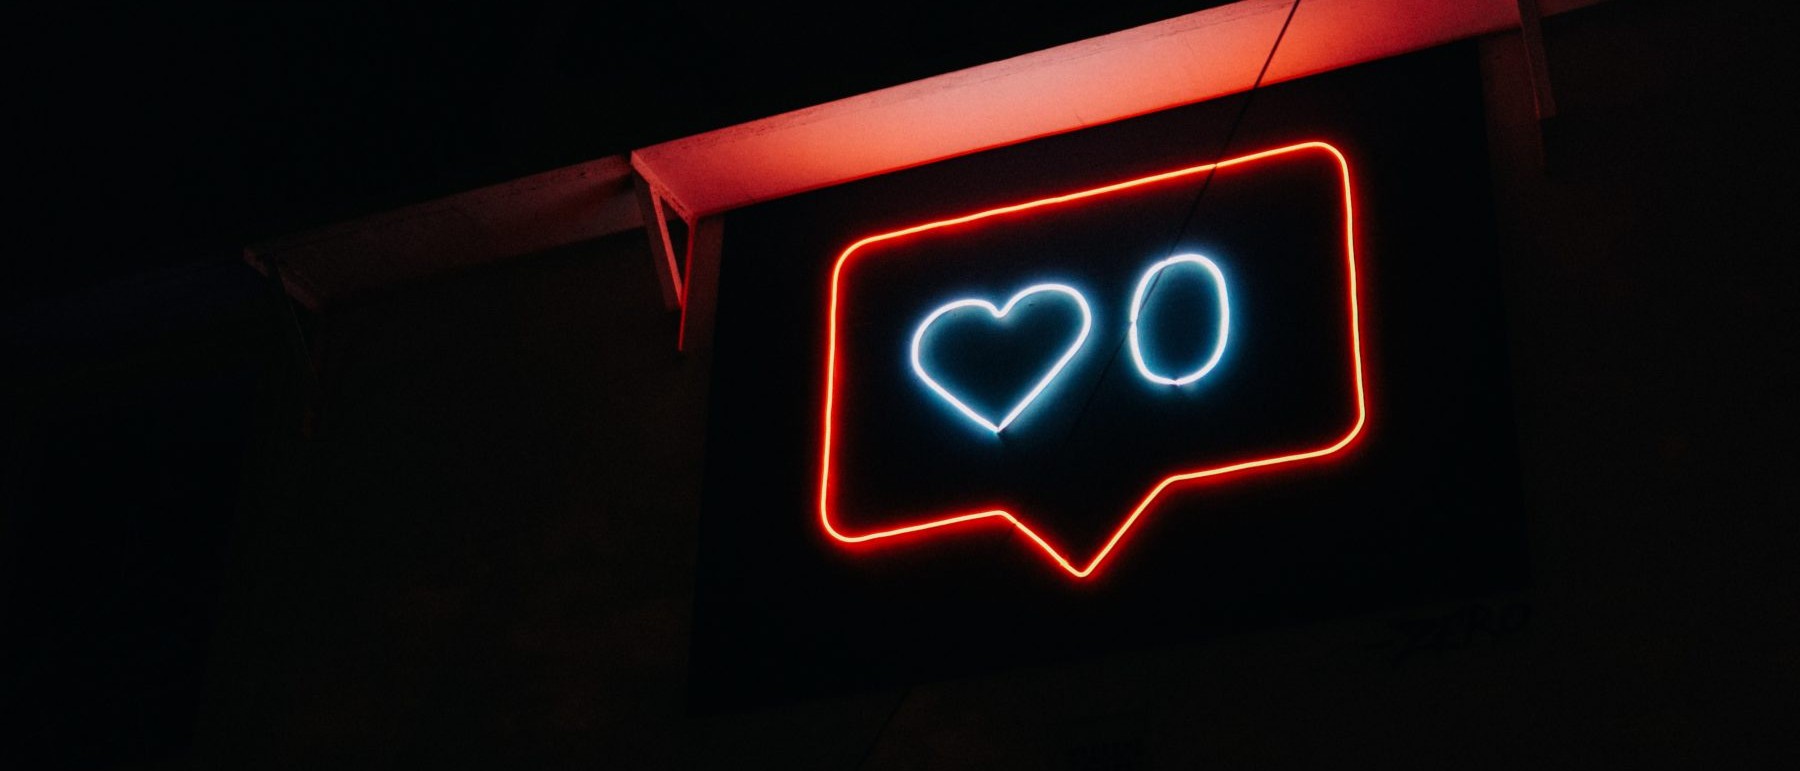 stock image of neon sign representing social media